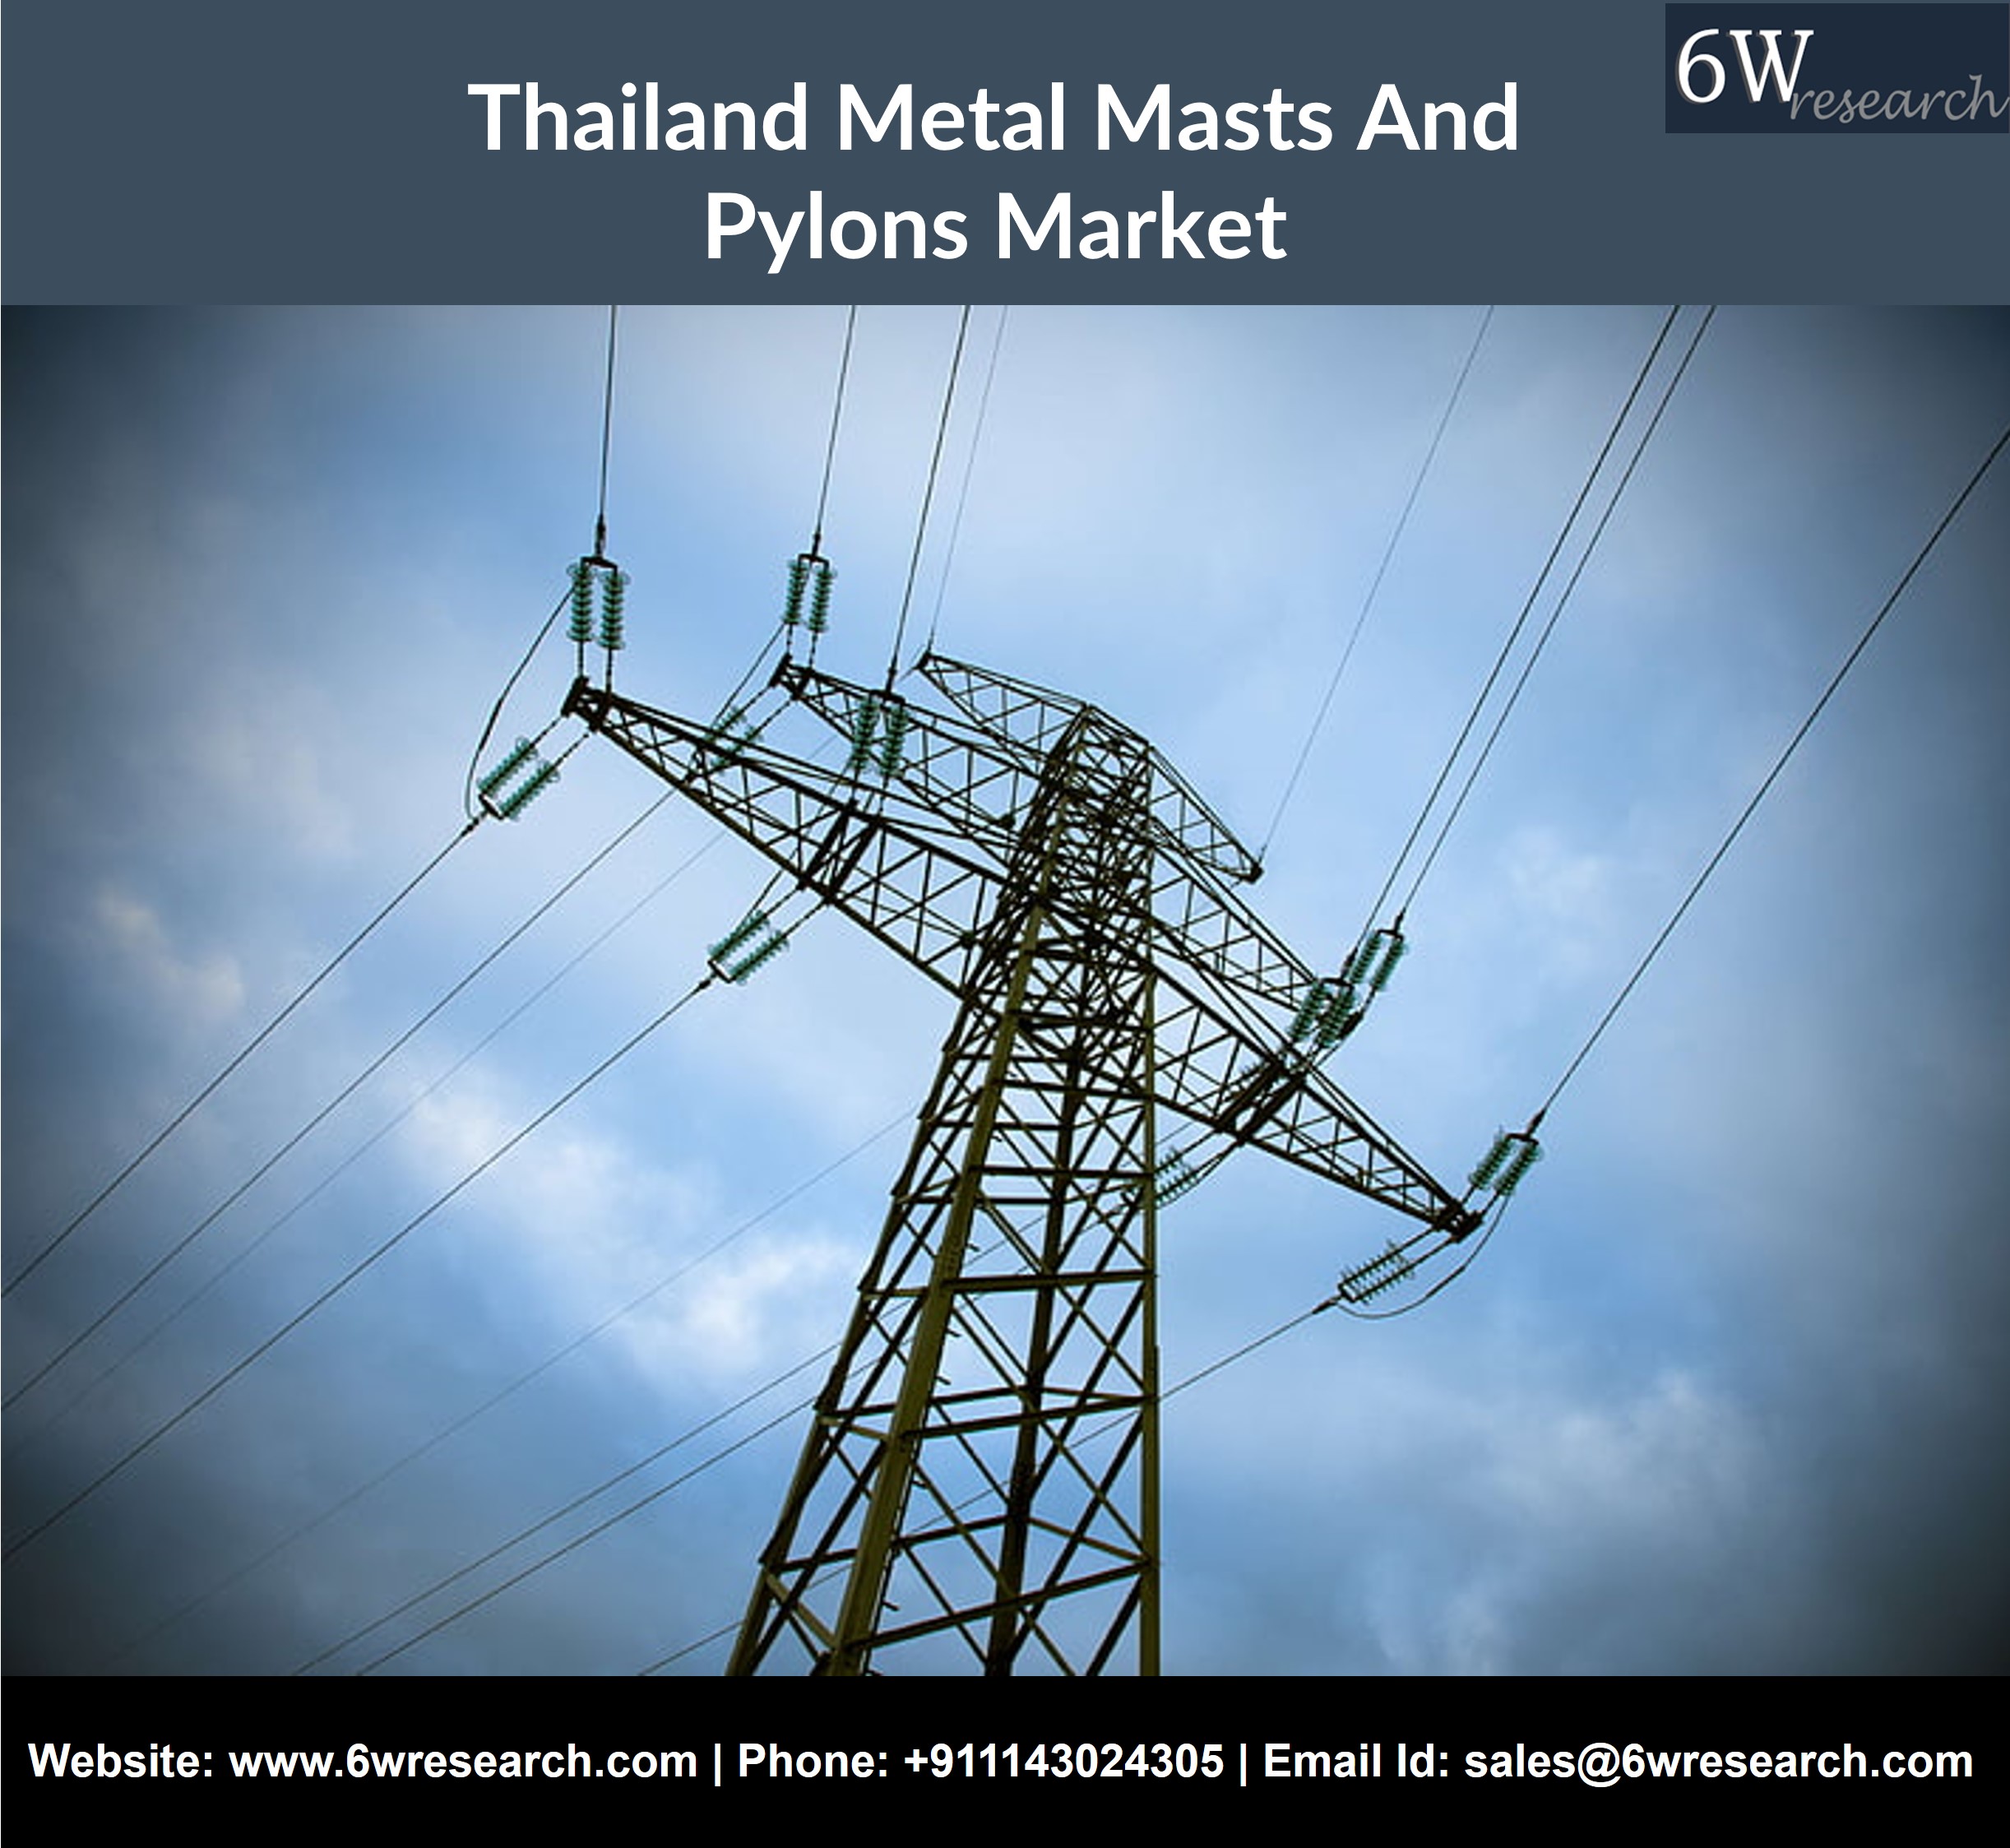 Thailand Metal Masts And Pylons Market